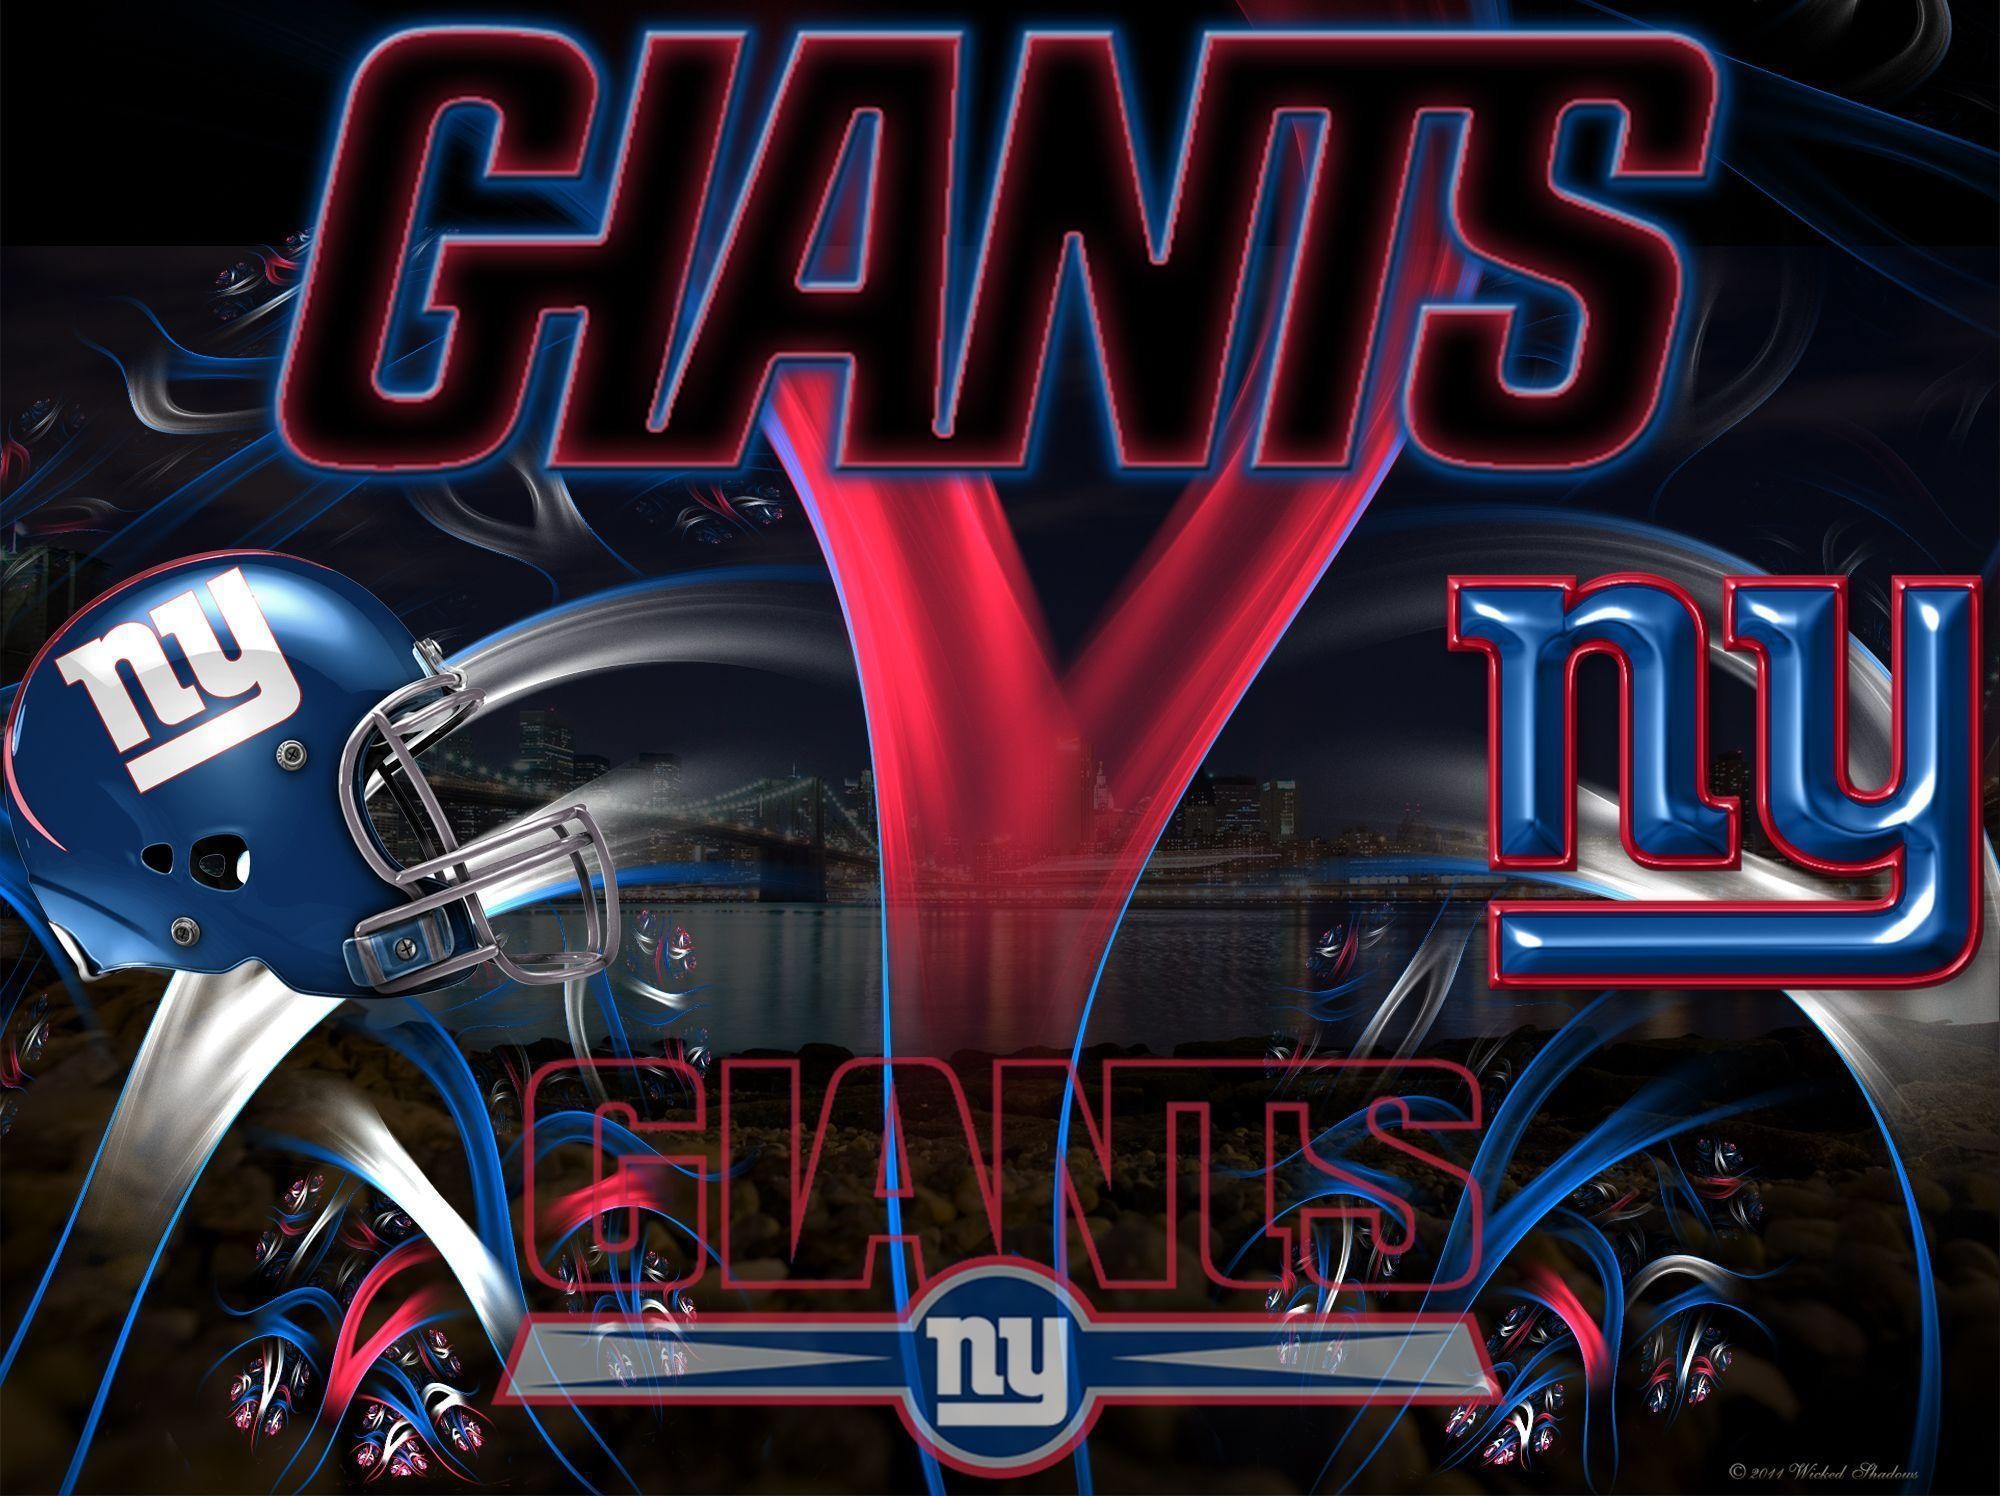 2000x1496 New York Giants Logo Wallpaper - WallpaperSafari